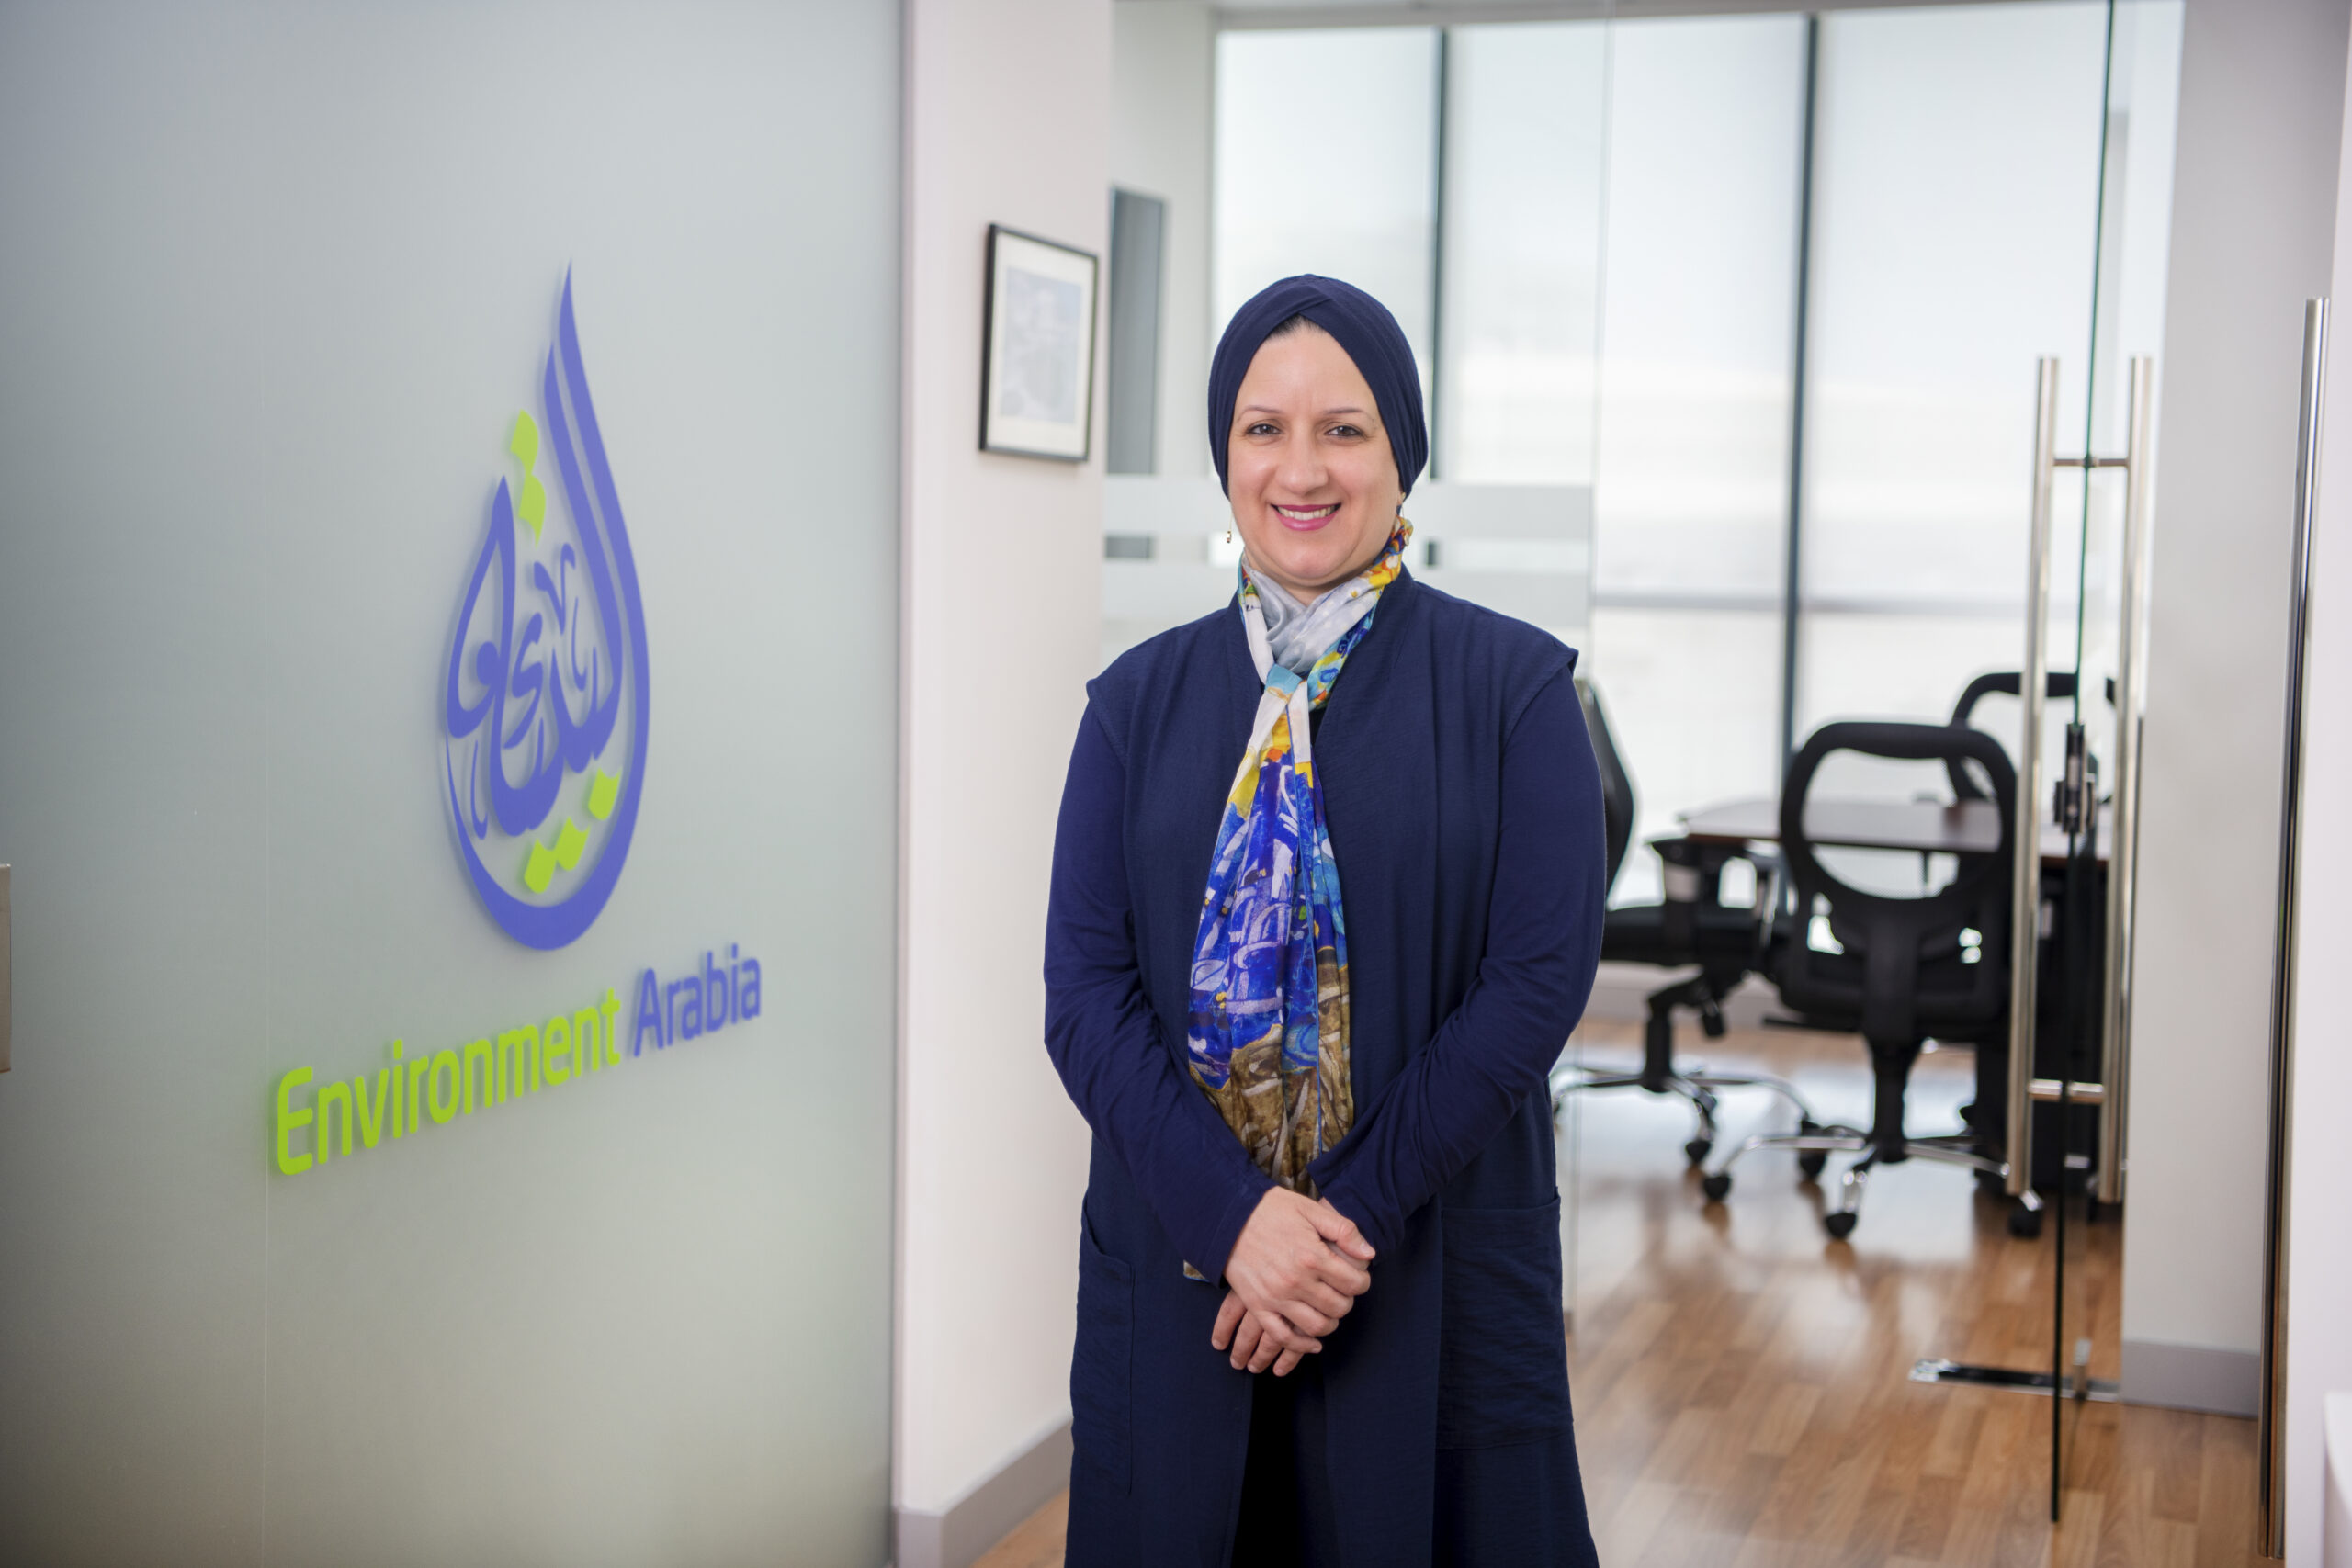 Founder – Environment Arabia Consultancy Services W.L.L